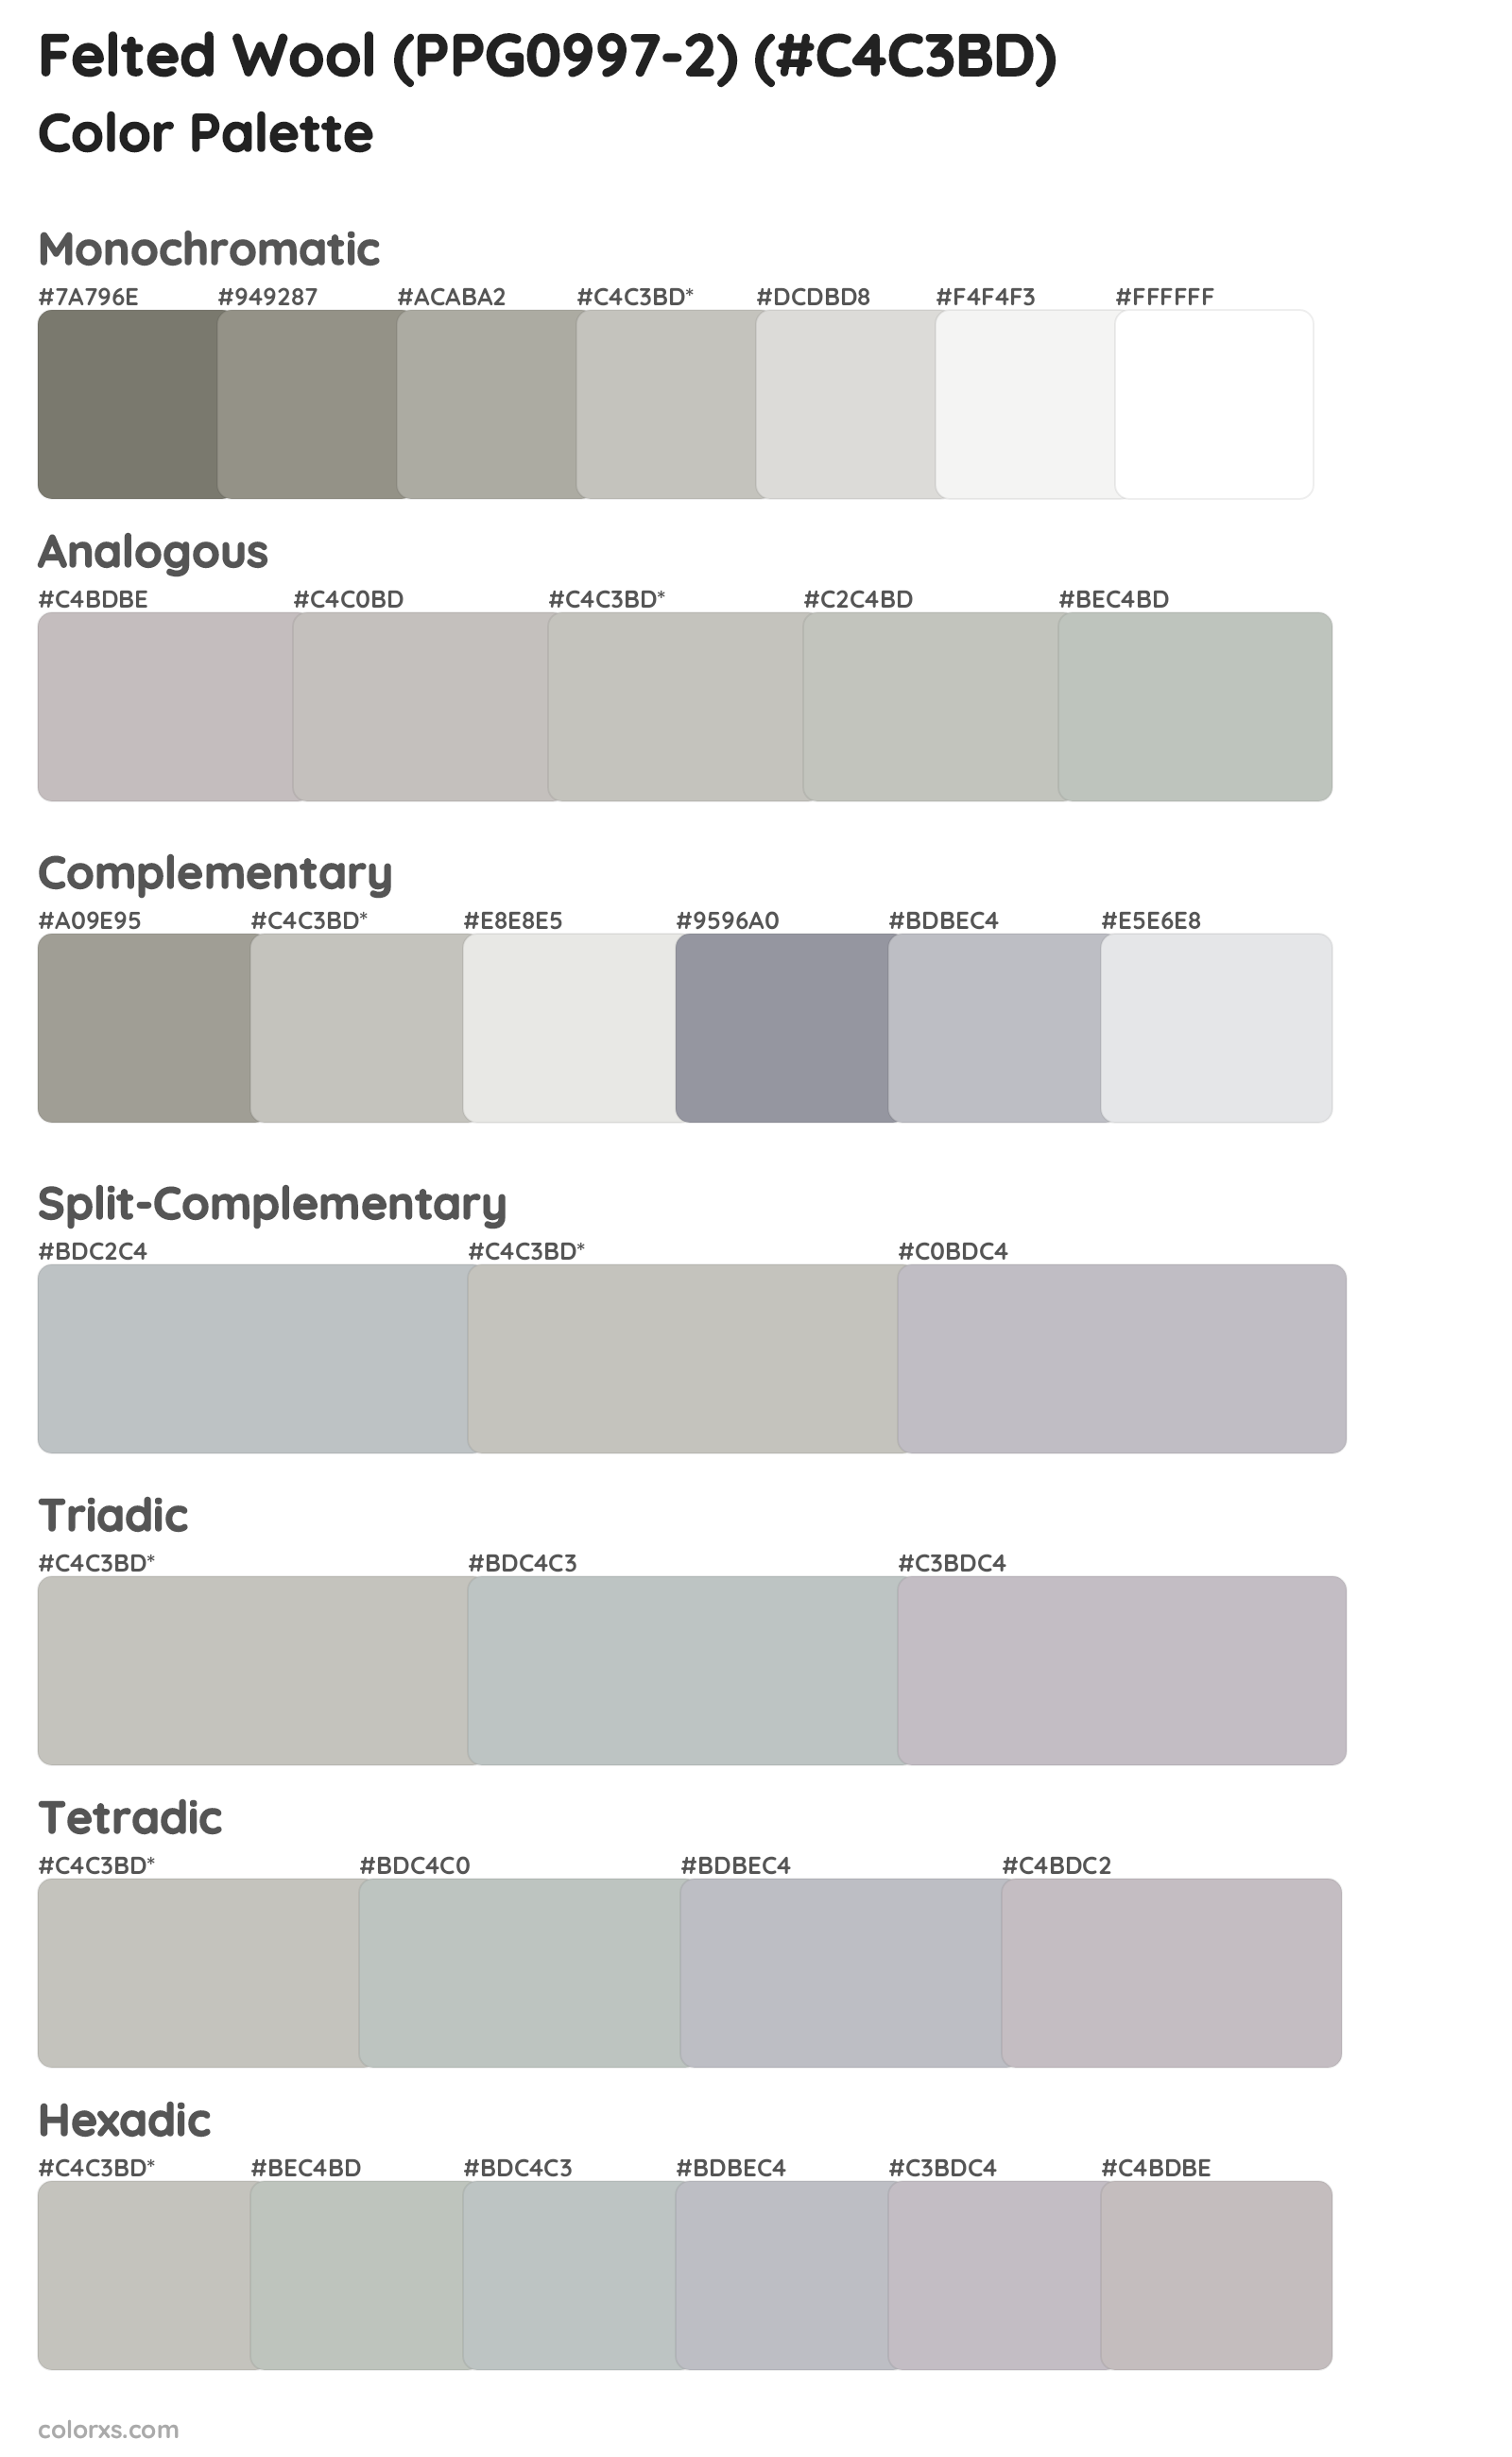 Felted Wool (PPG0997-2) Color Scheme Palettes